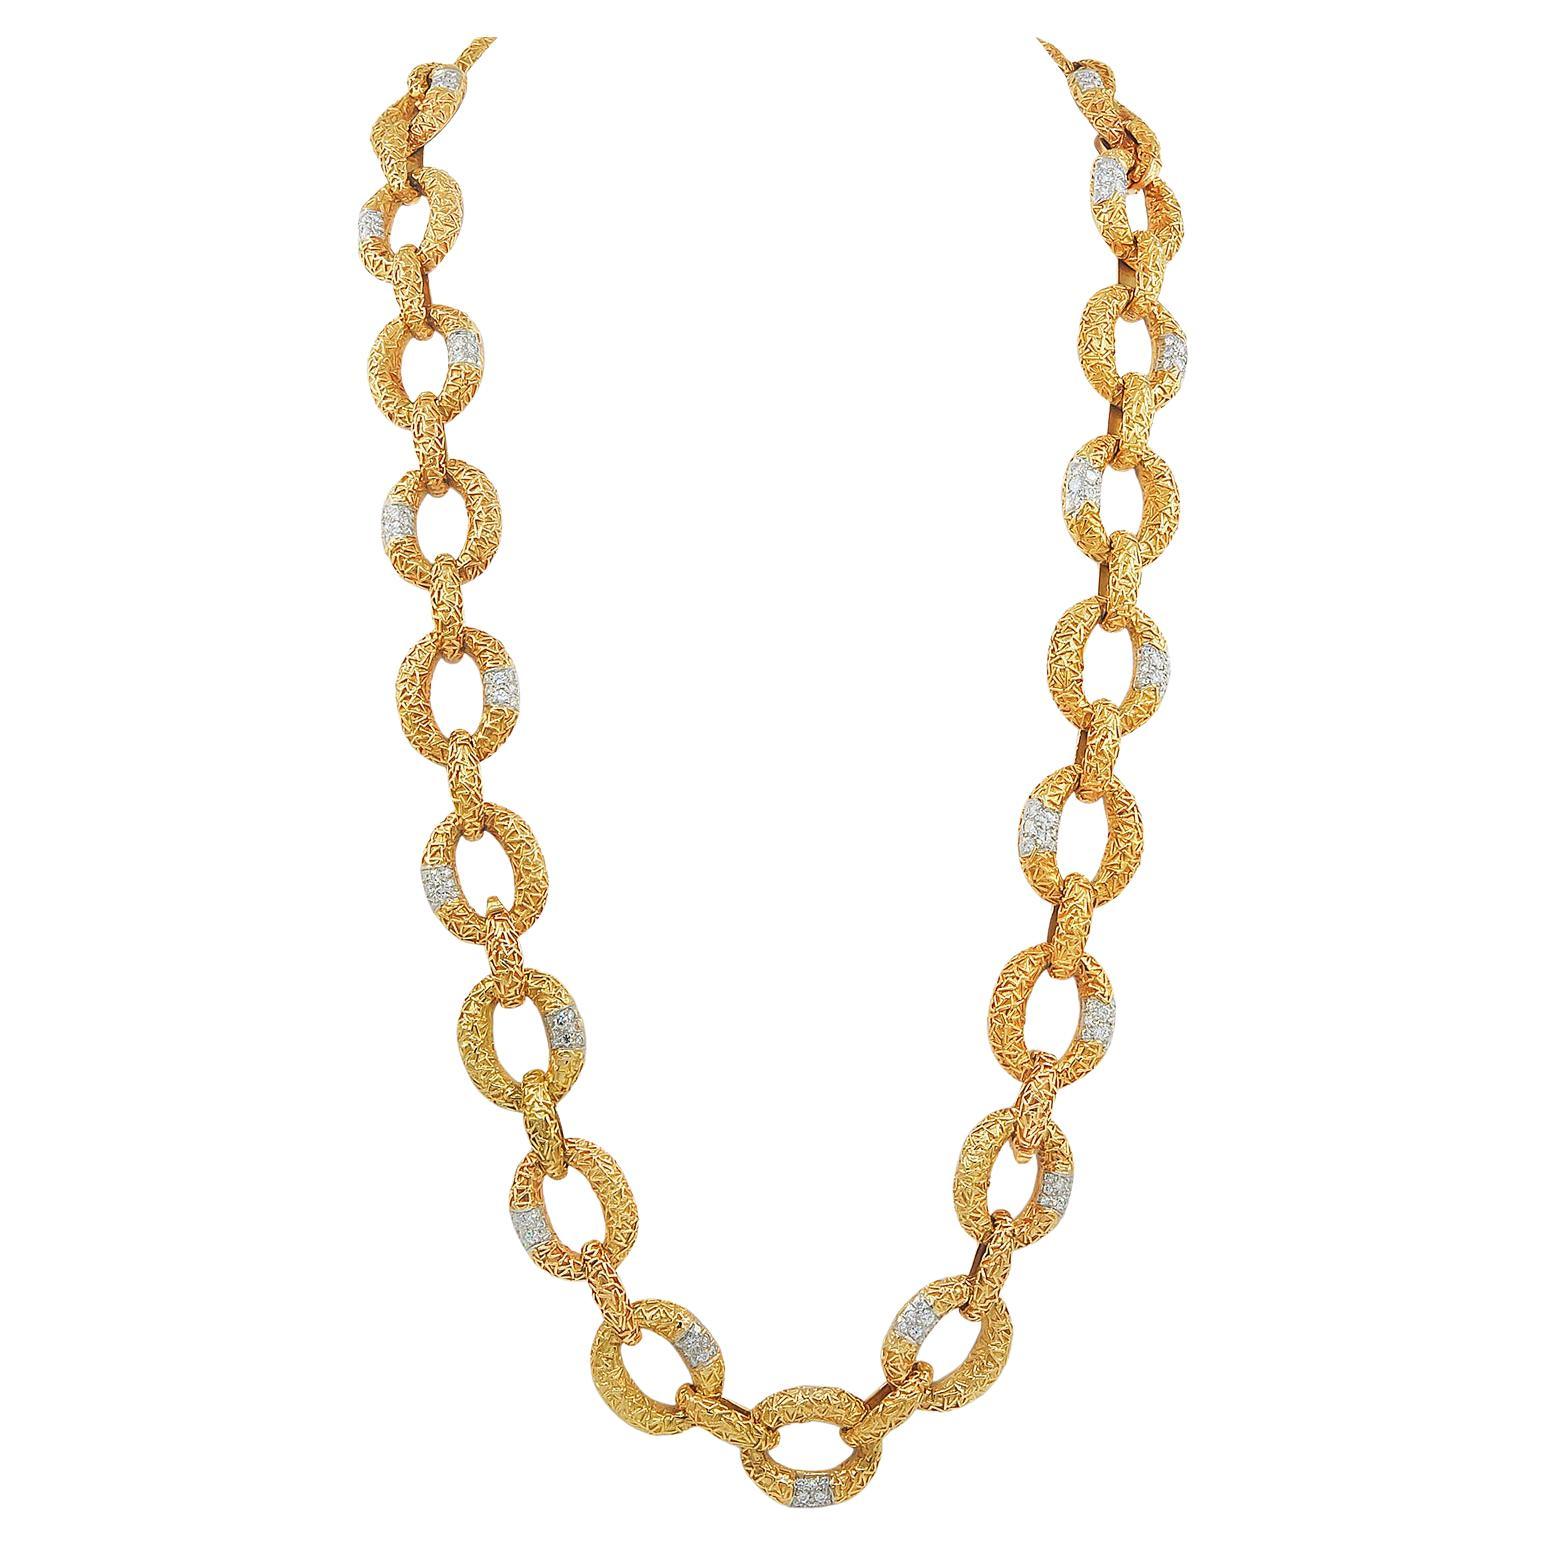 Van Cleef & Arpels Vintage 1970s Diamond Gold Link Necklace Bracelet Combination